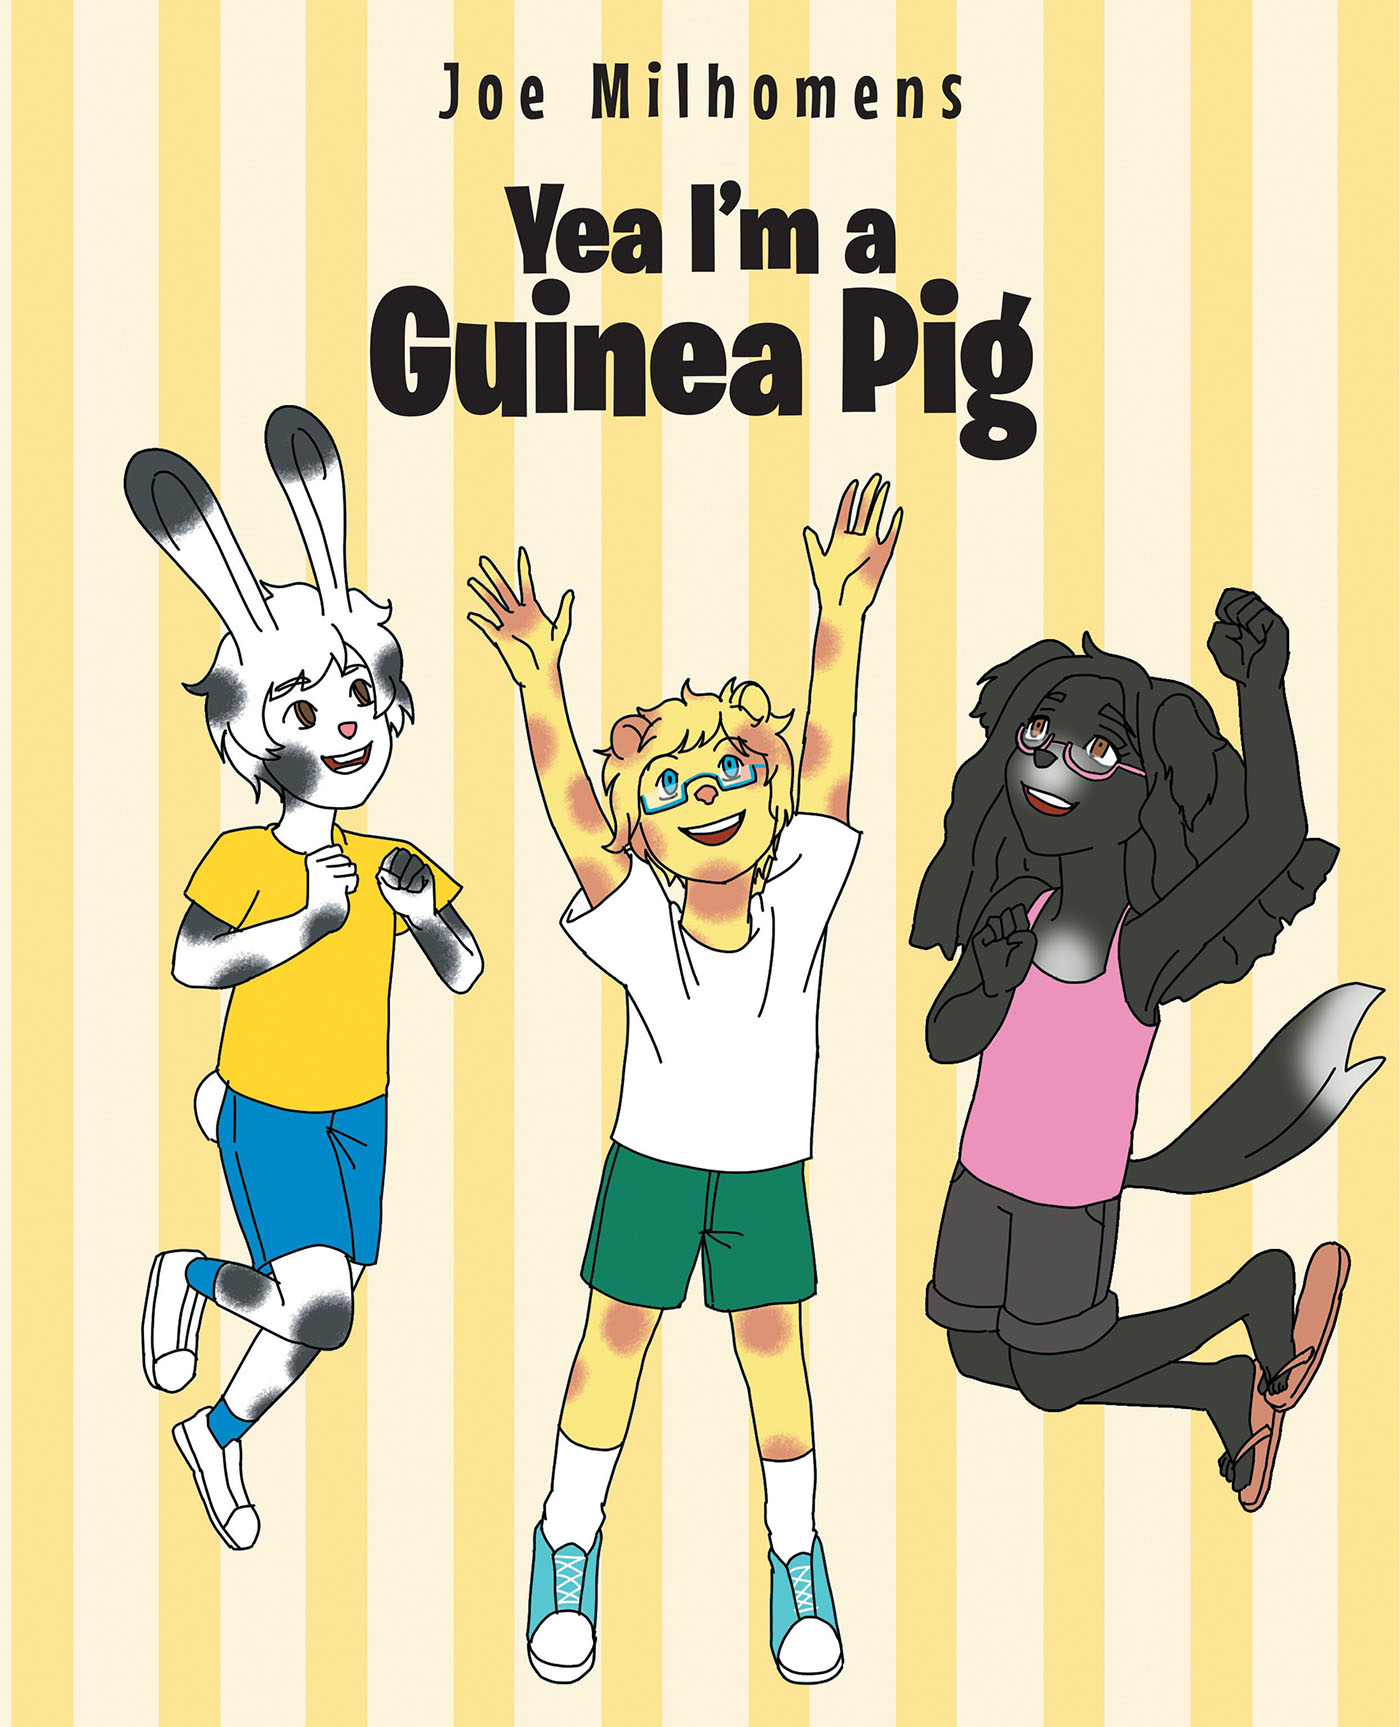 Yea I'm a Guinea Pig Cover Image